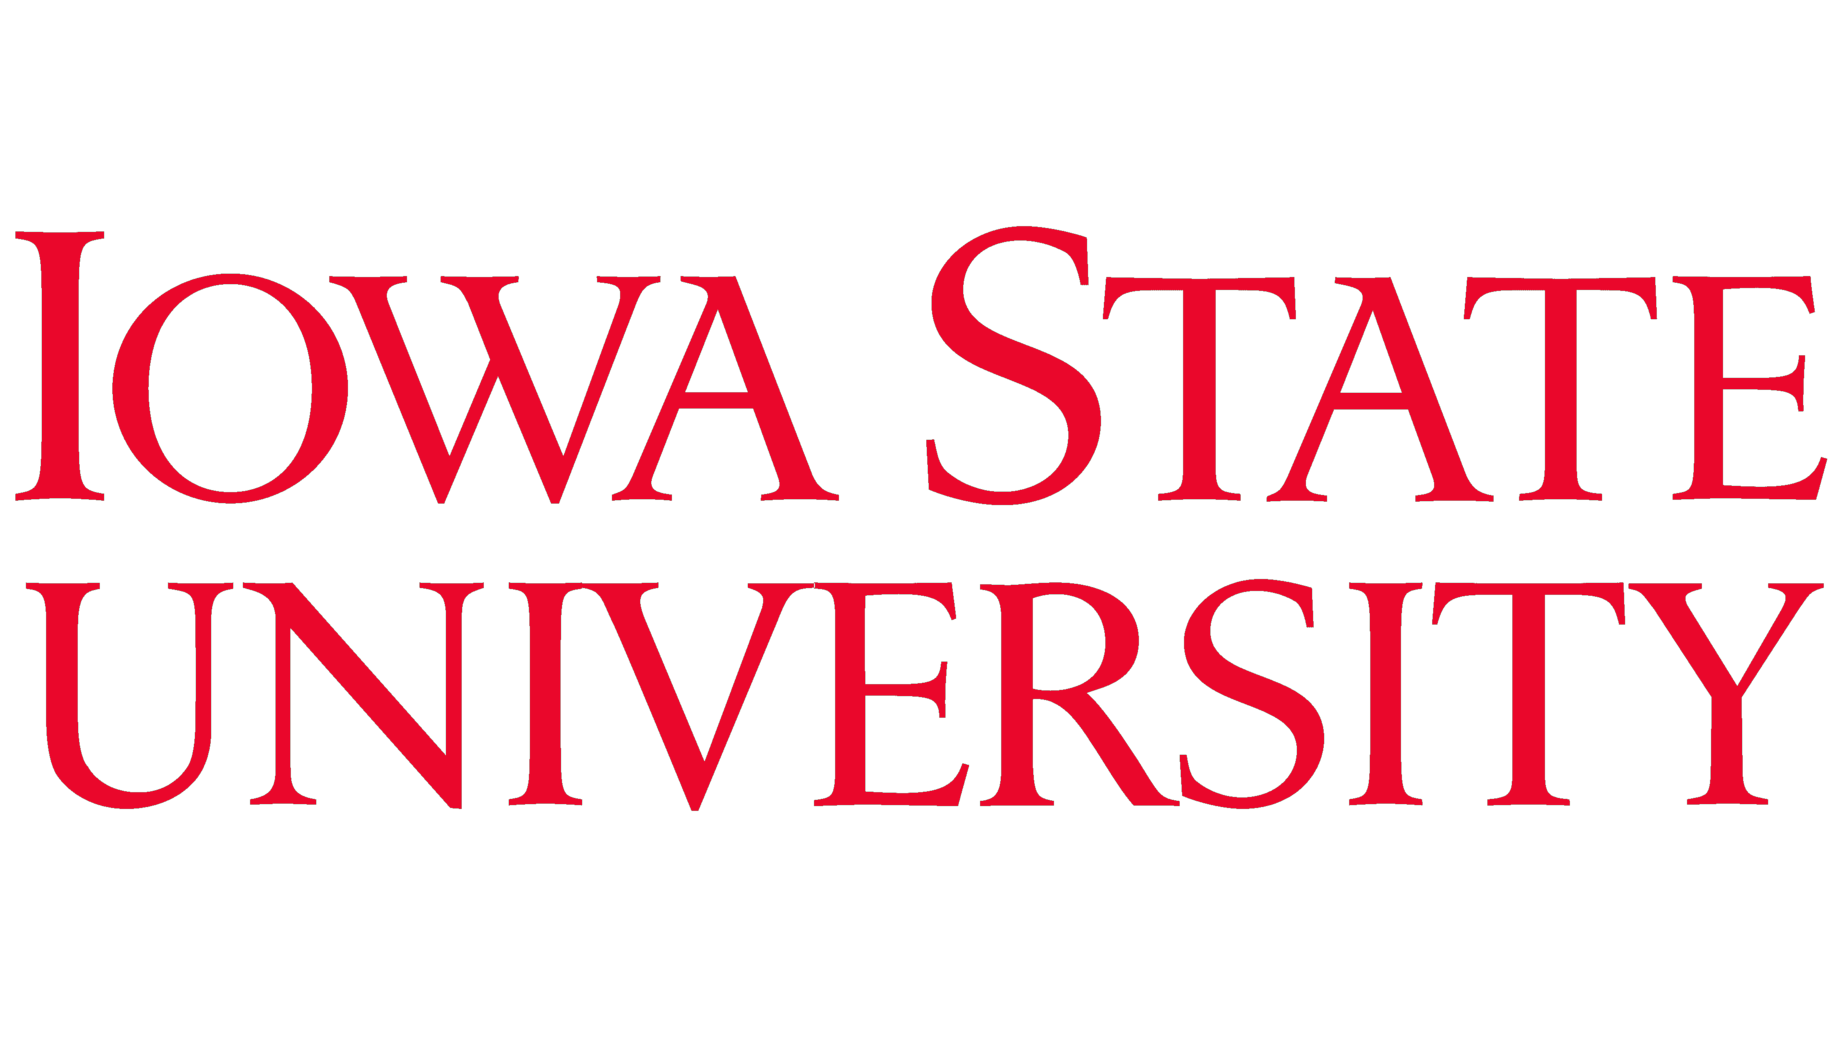 Iowa state university sign